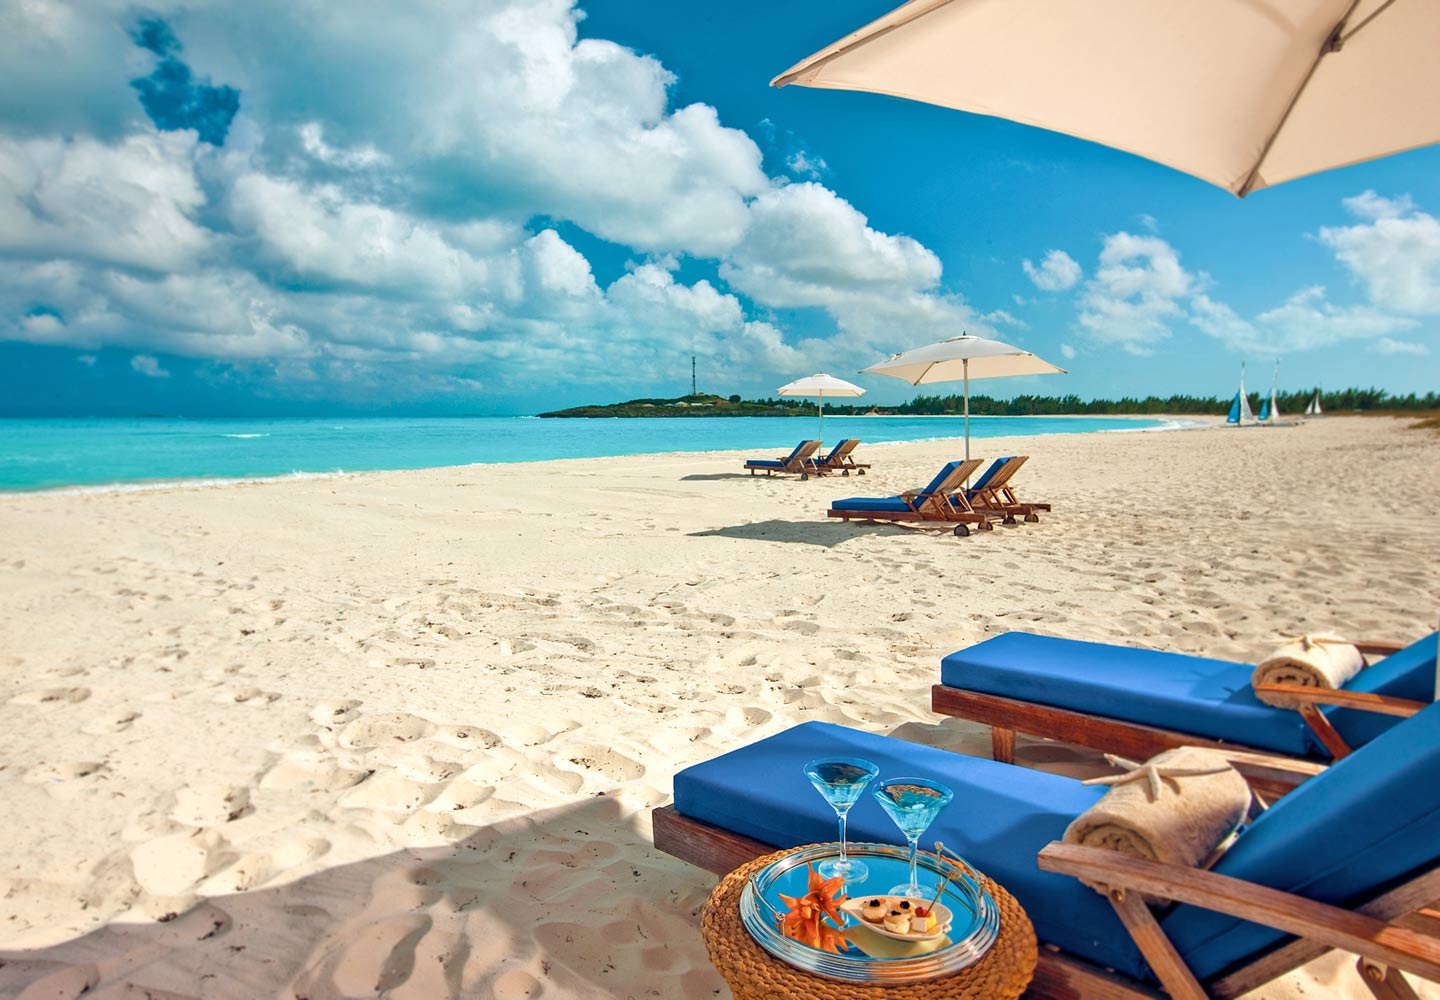 Sandals Emerald Bay - Great Exuma, Bahamas